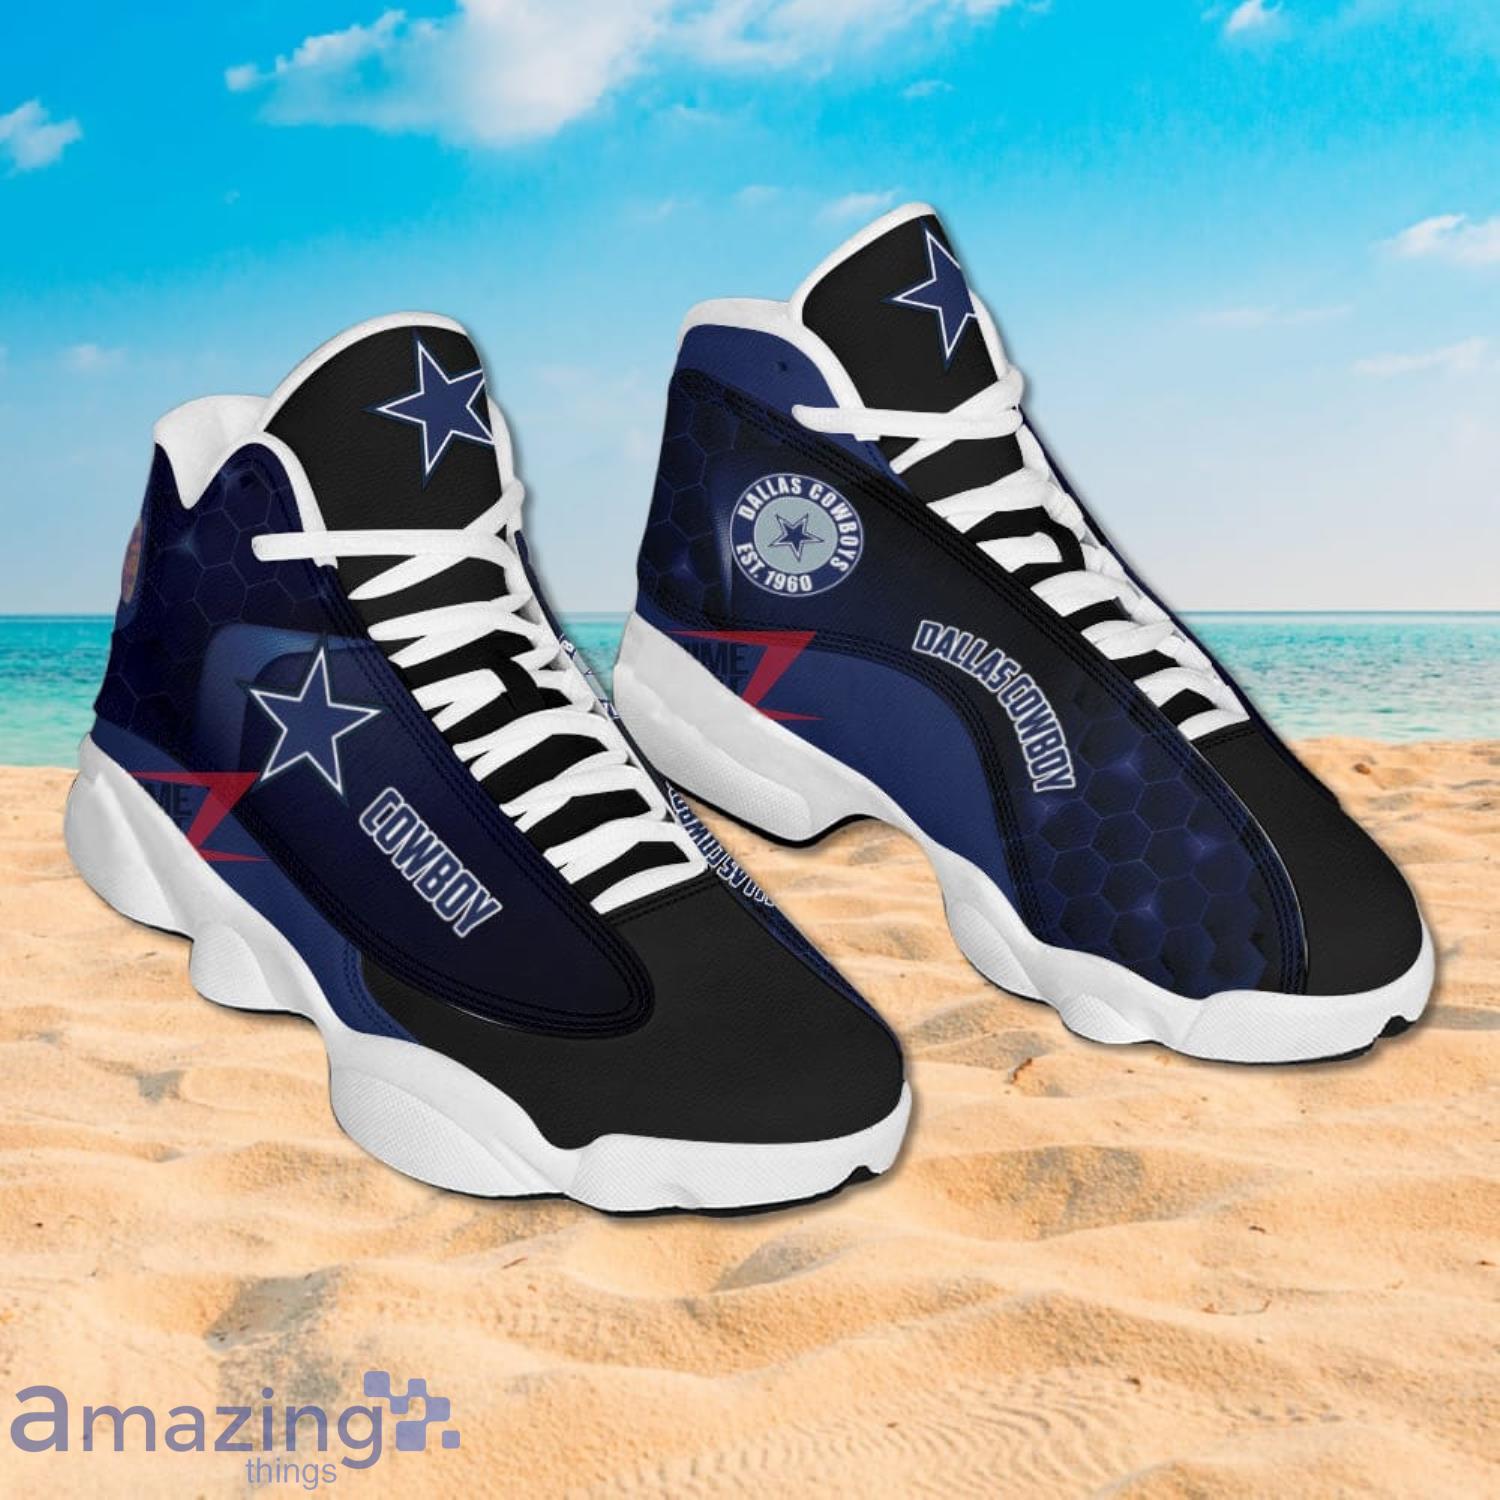 Dallas Cowboys NFL Personalized Air Jordan 13 Sport Shoes - Growkoc